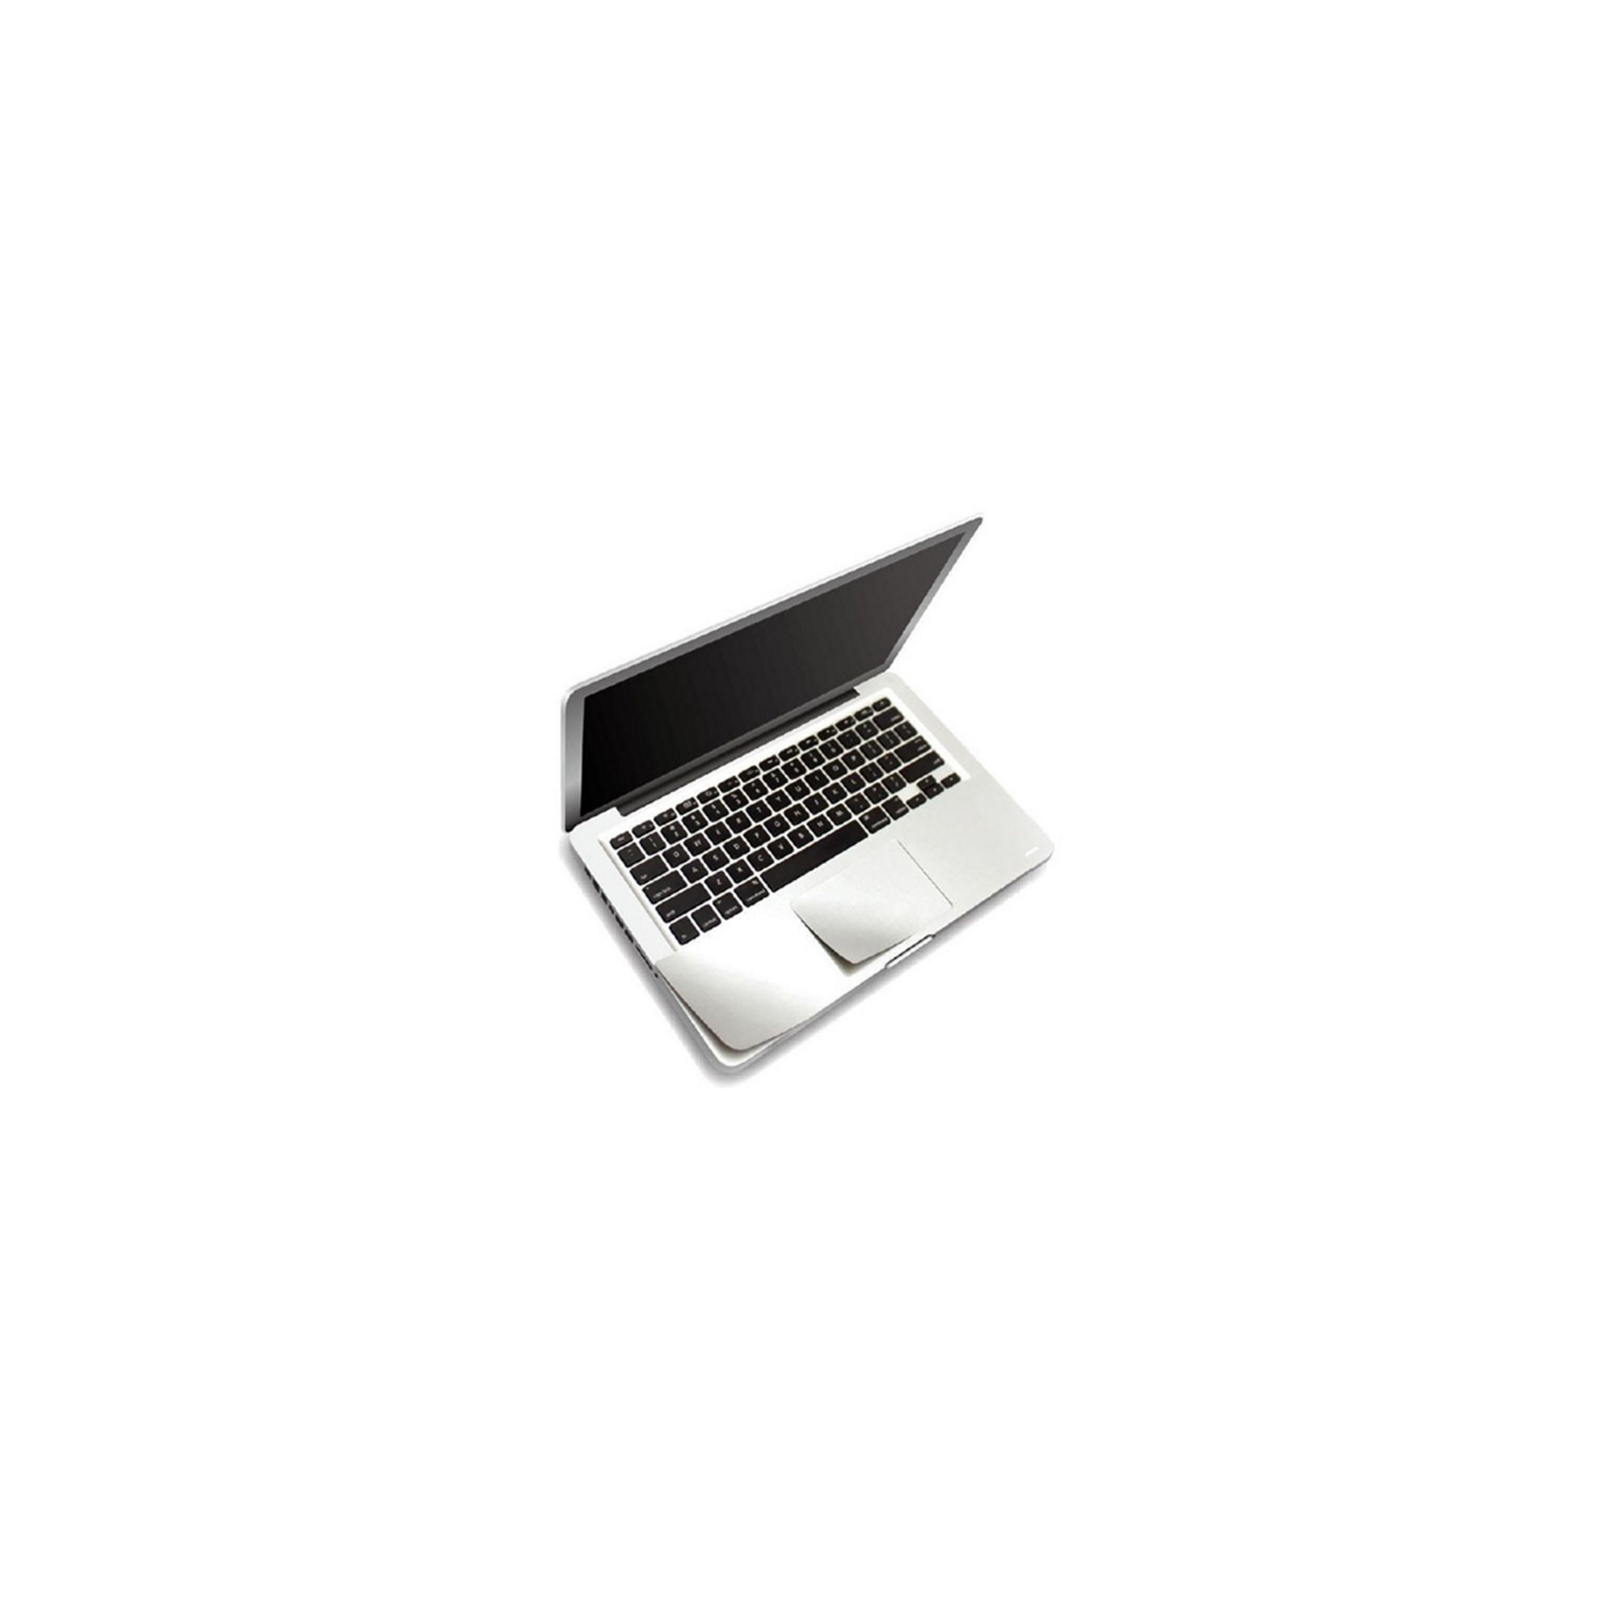 Пленка защитная JCPAL WristGuard Palm Guard для MacBook Pro 13 (JCP2014) изображение 3